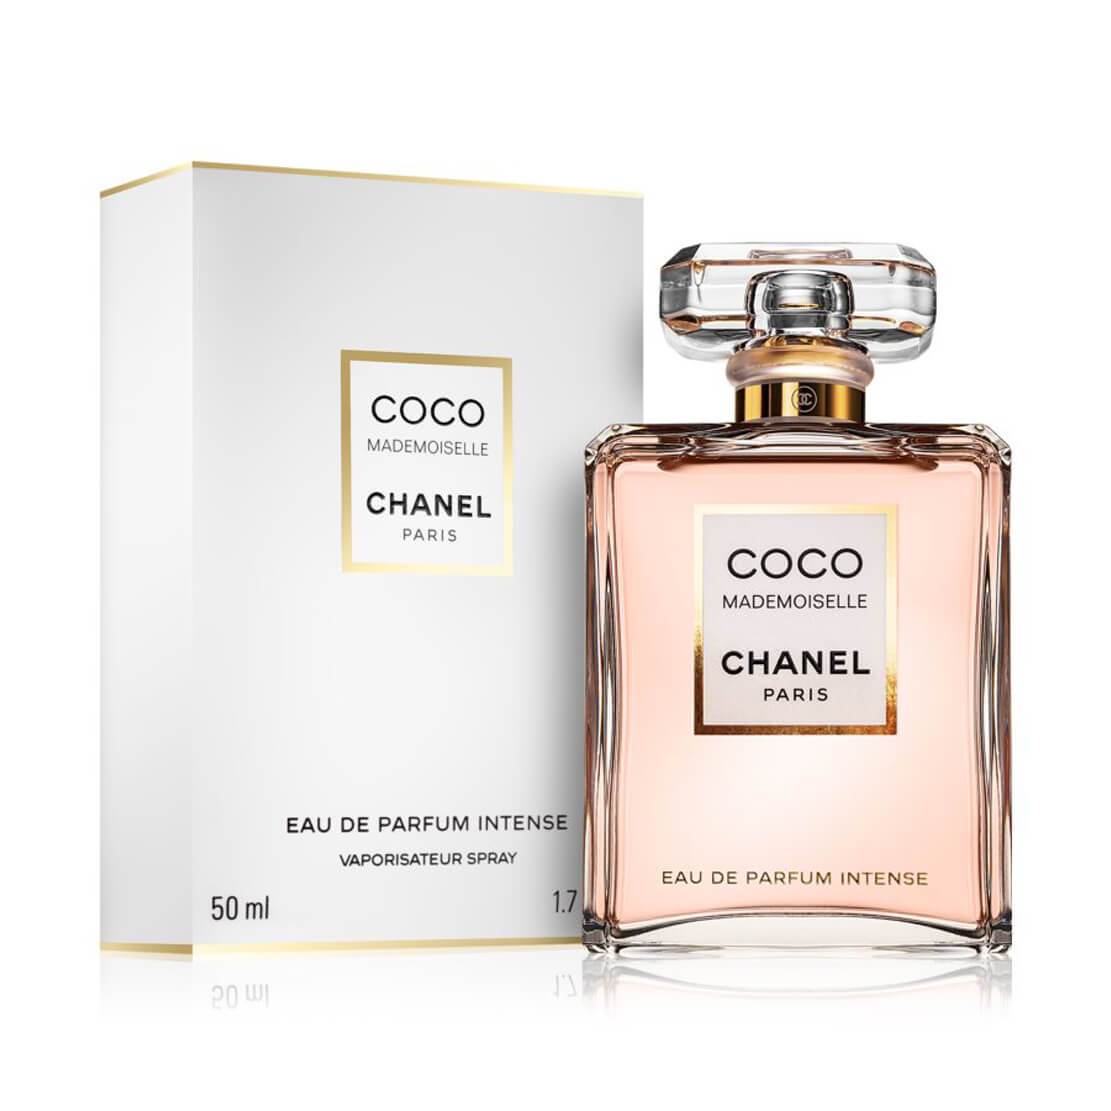 Chanel Coco Mademoiselle EDP Intense 50ml - Intoxicating Women's